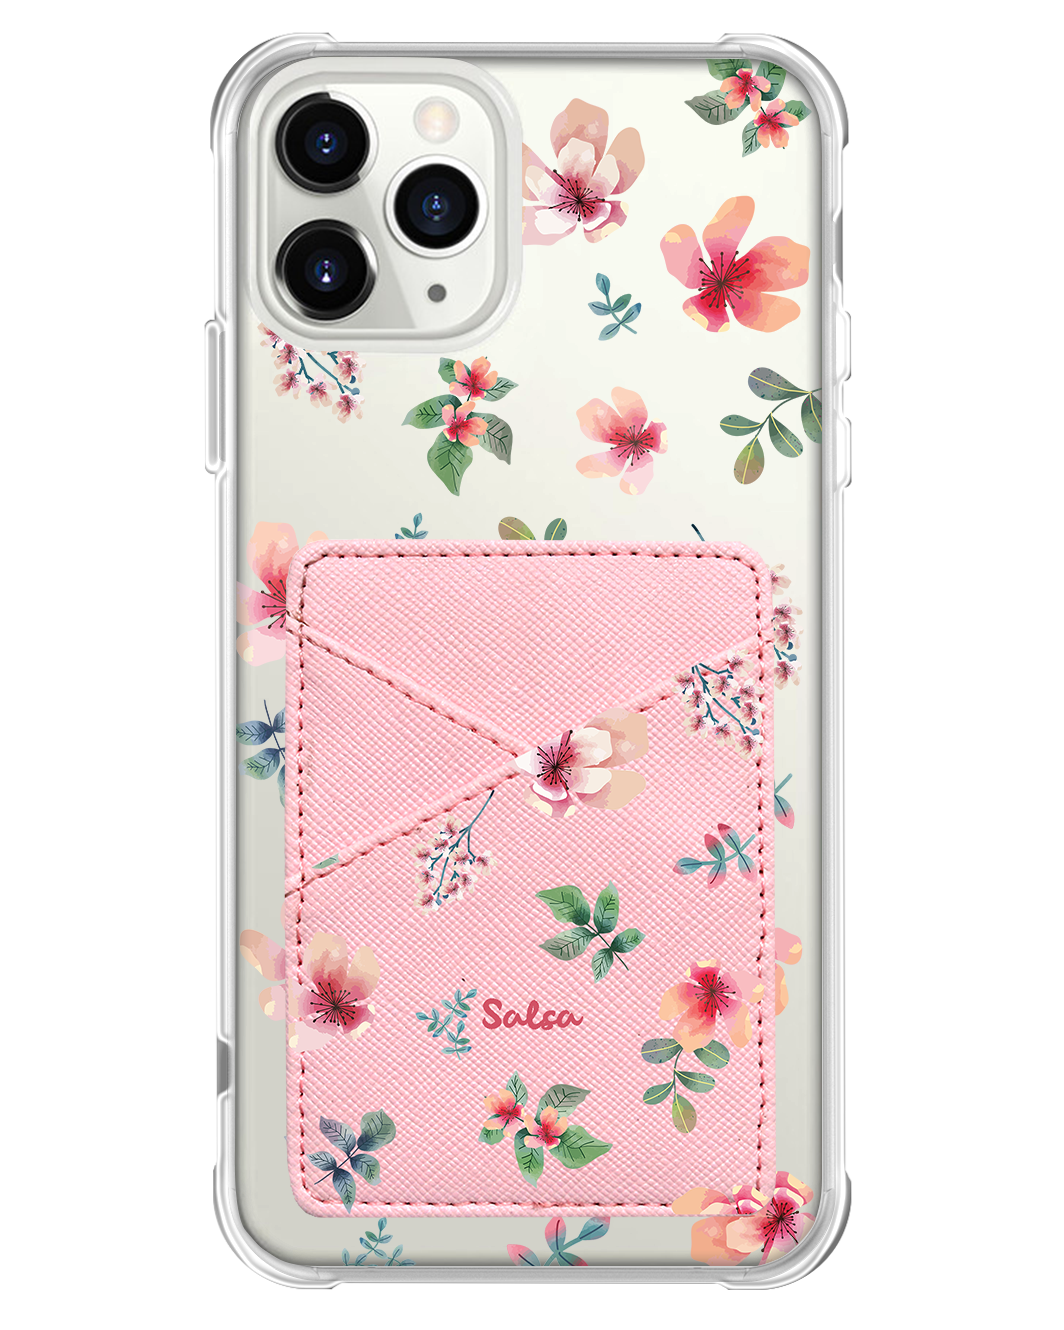 iPhone Phone Wallet Case - Botanical Garden 5.0